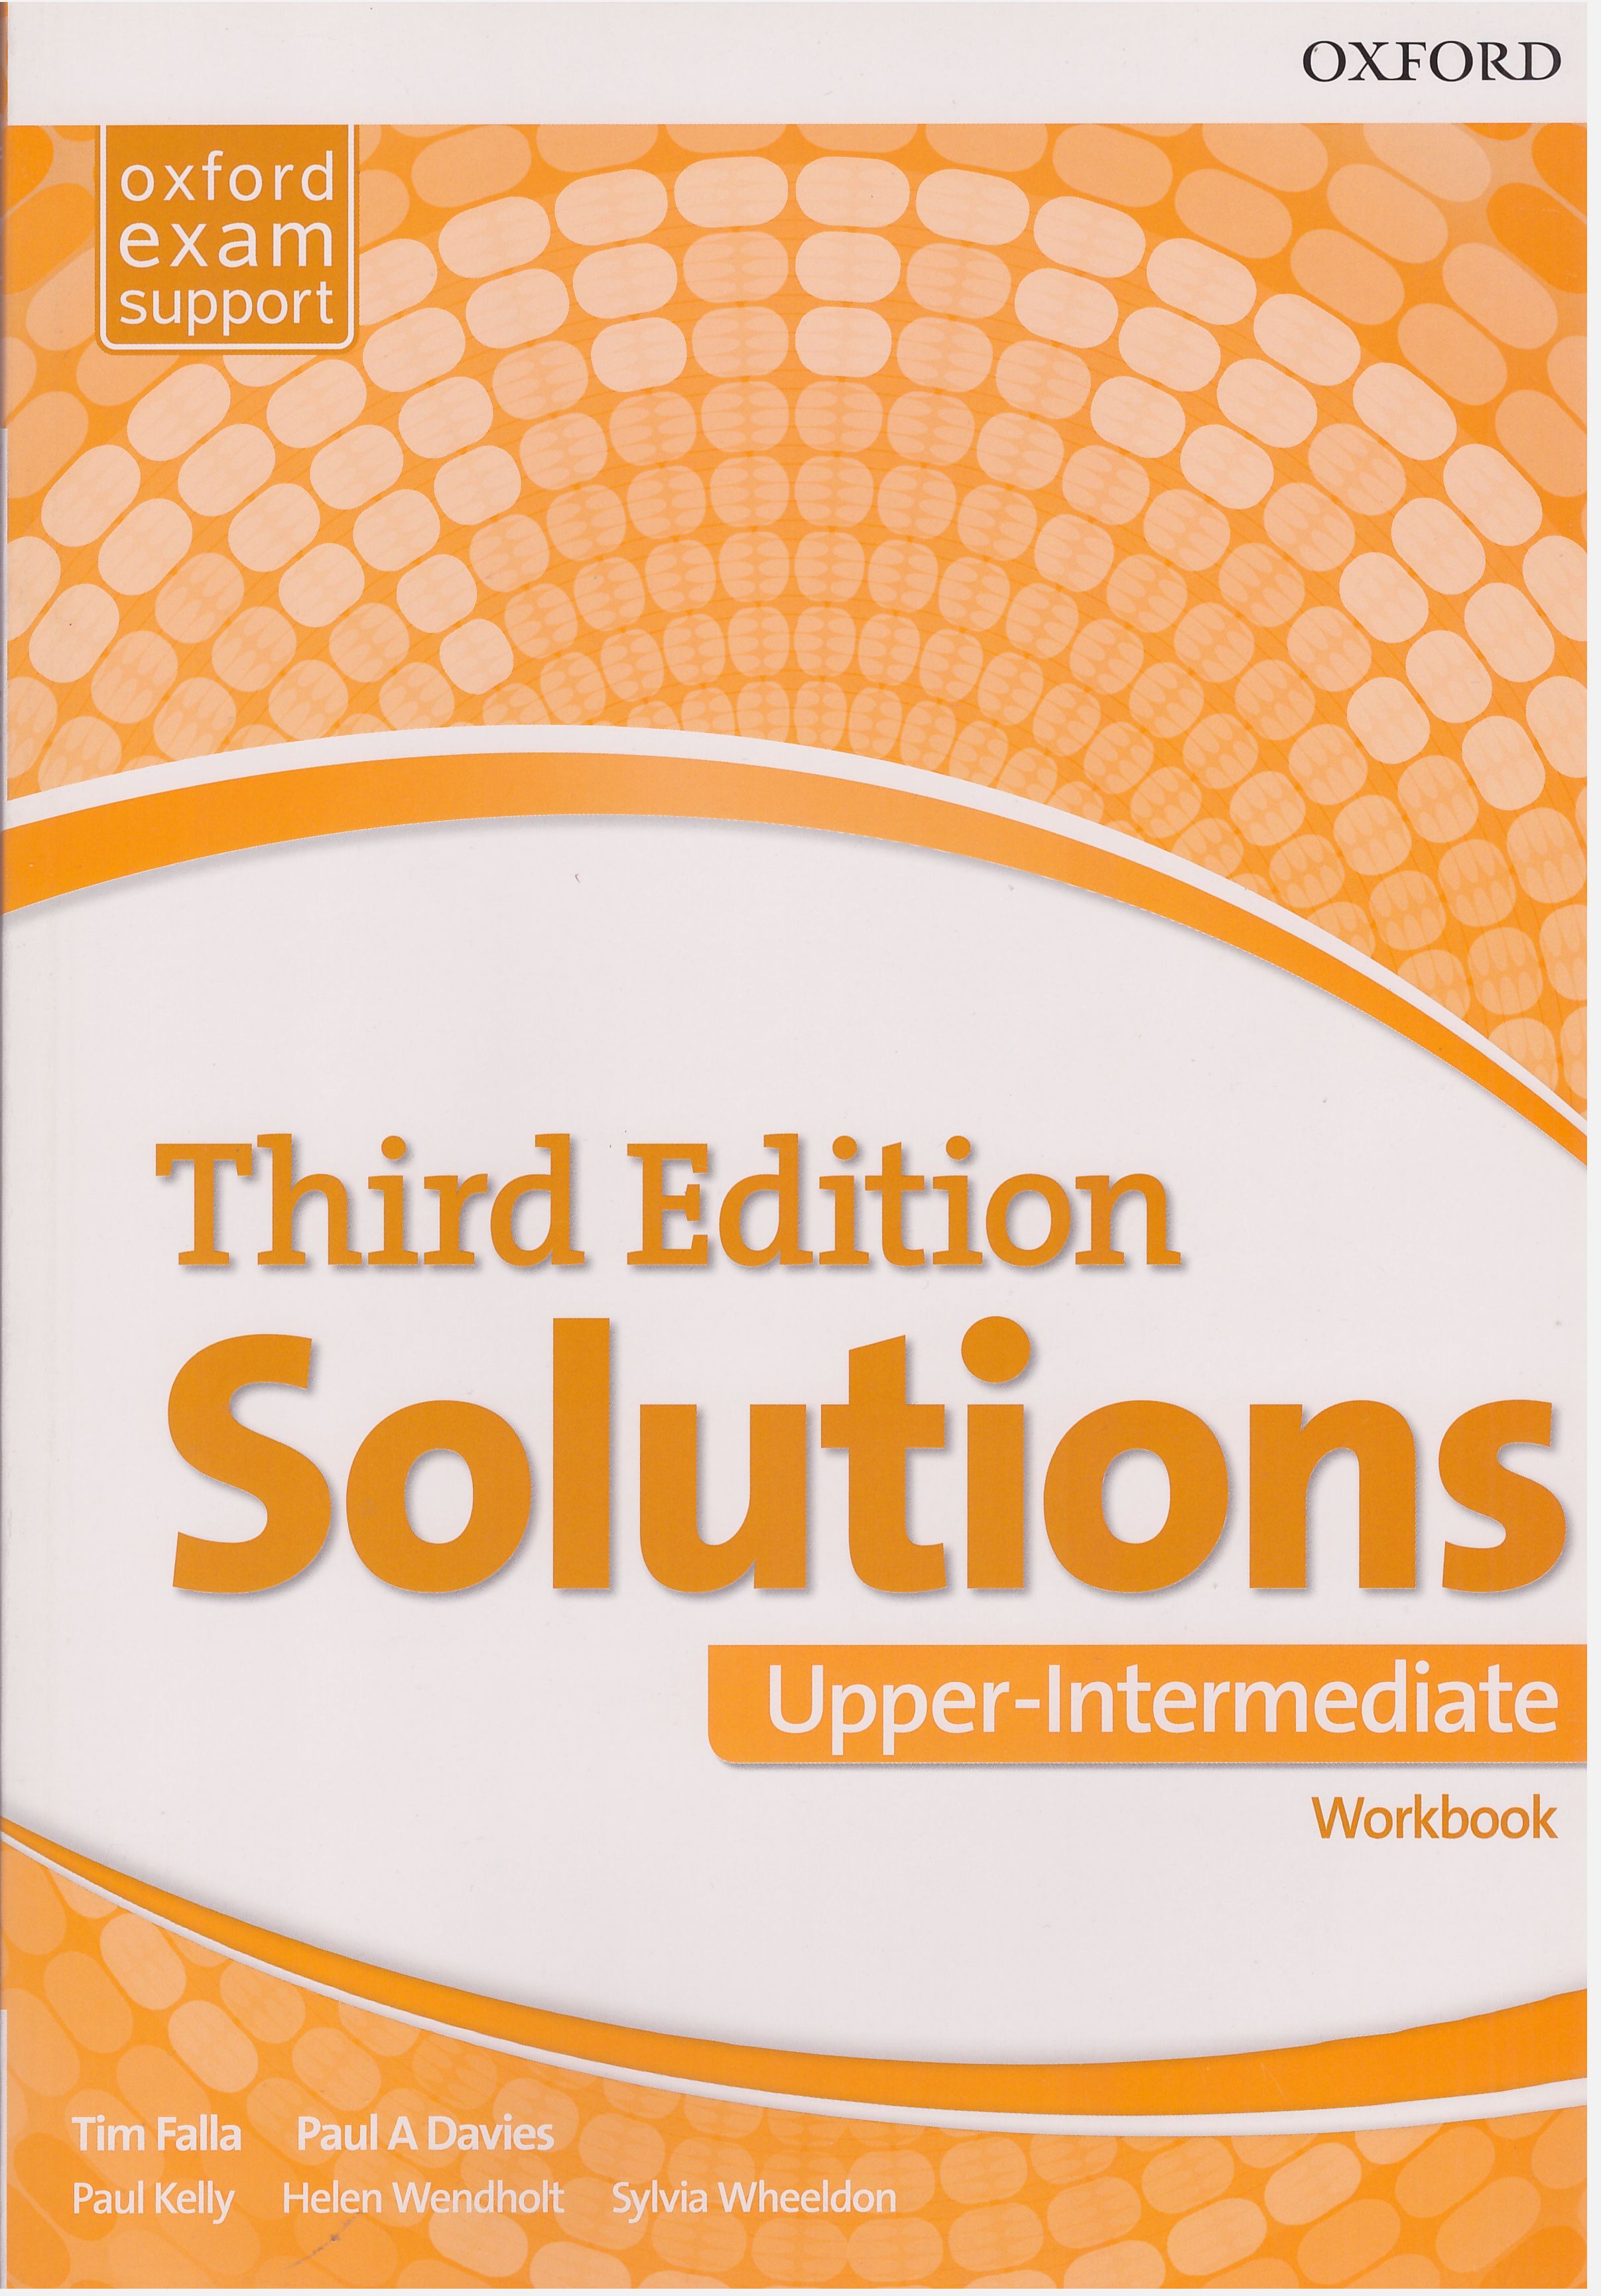 Solution pre intermediate 3rd edition workbook audio. Solutions pre-Intermediate 3rd Edition. Oxford solutions 3rd Edition Upper-Intermediate. Oxford solutions pre-Intermediate 3rd Edition. Solutions pre-Intermediate 3 Edition.